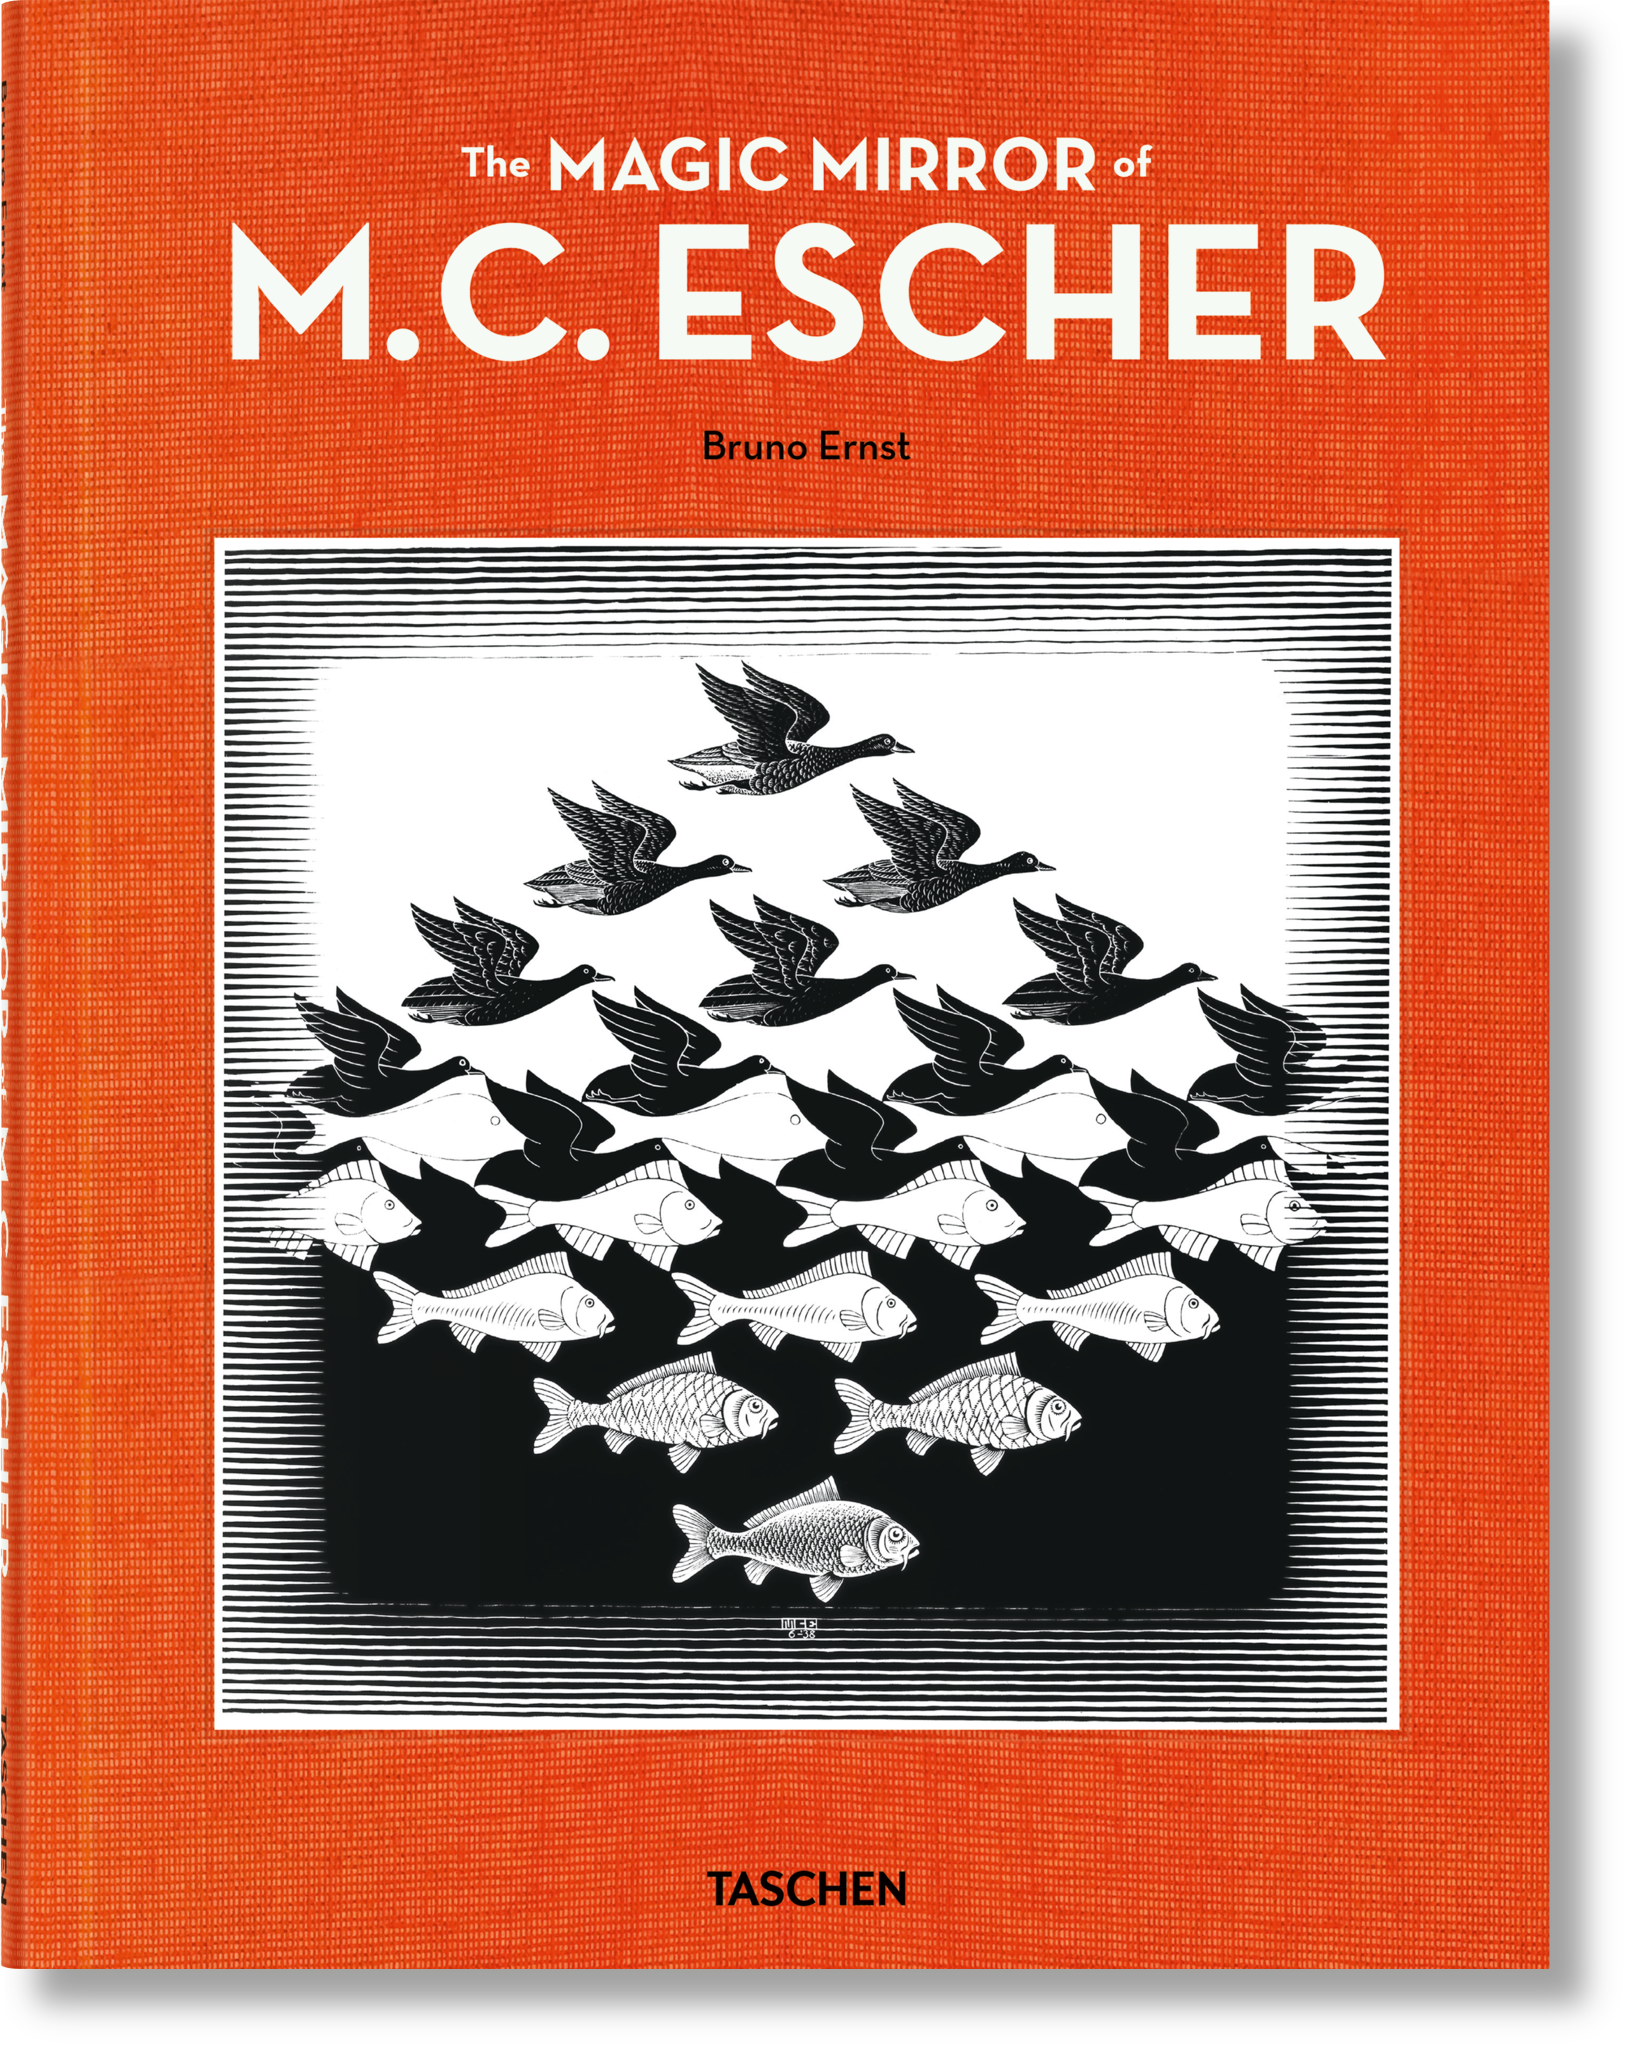 The Magic Mirror or M.C. Escher